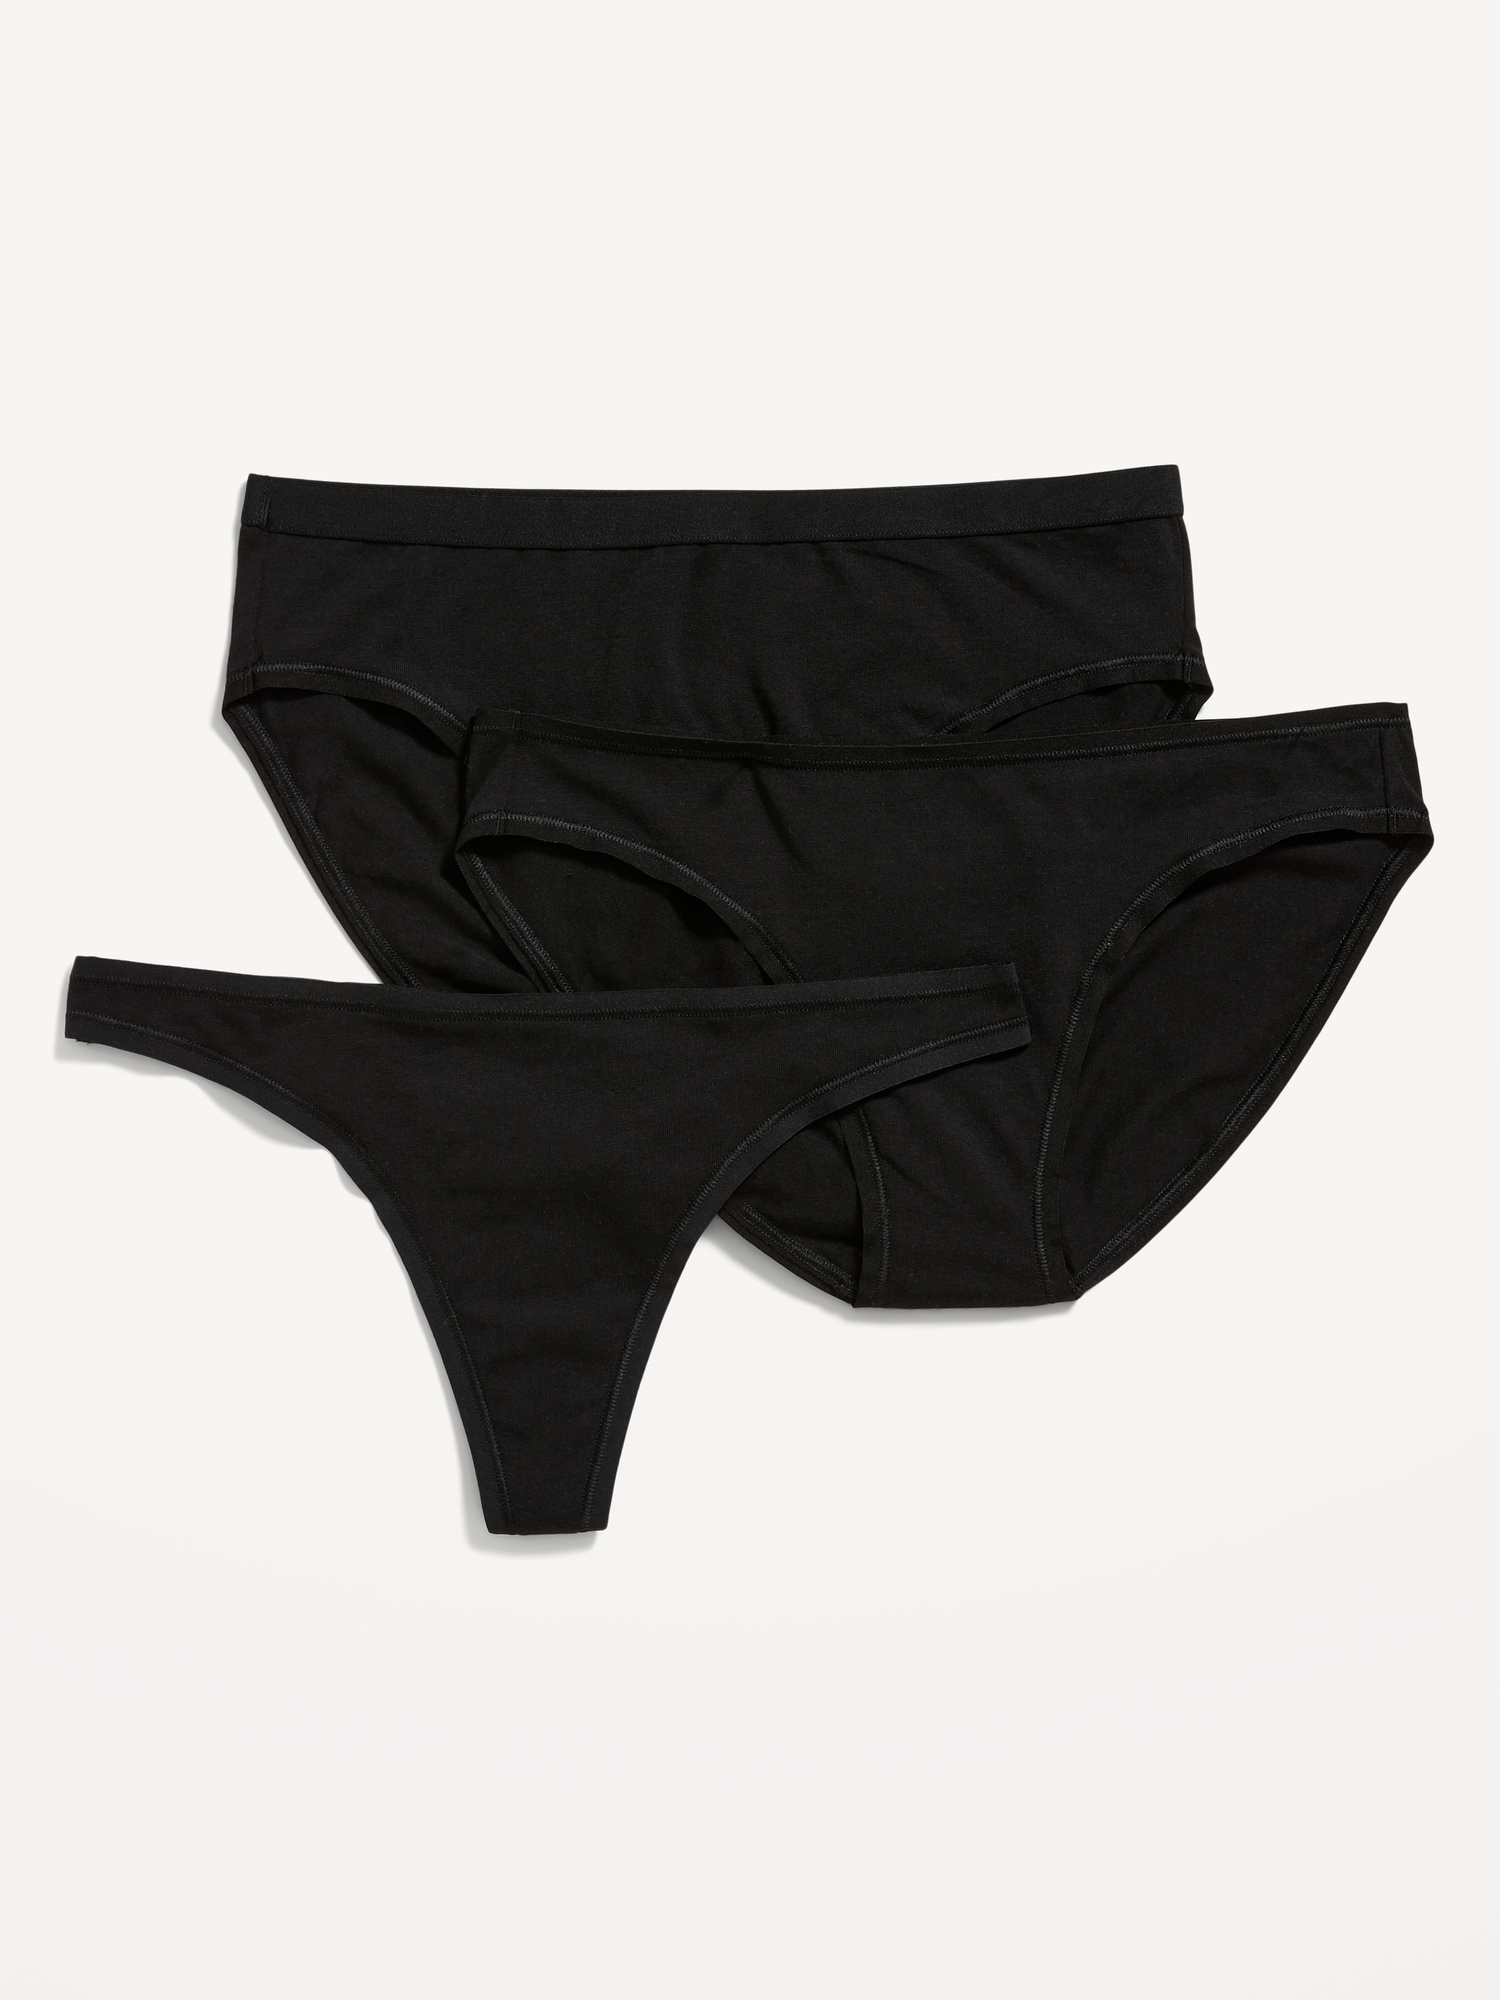 Variety Pack of Womens Underwear Underwear Panties Women's